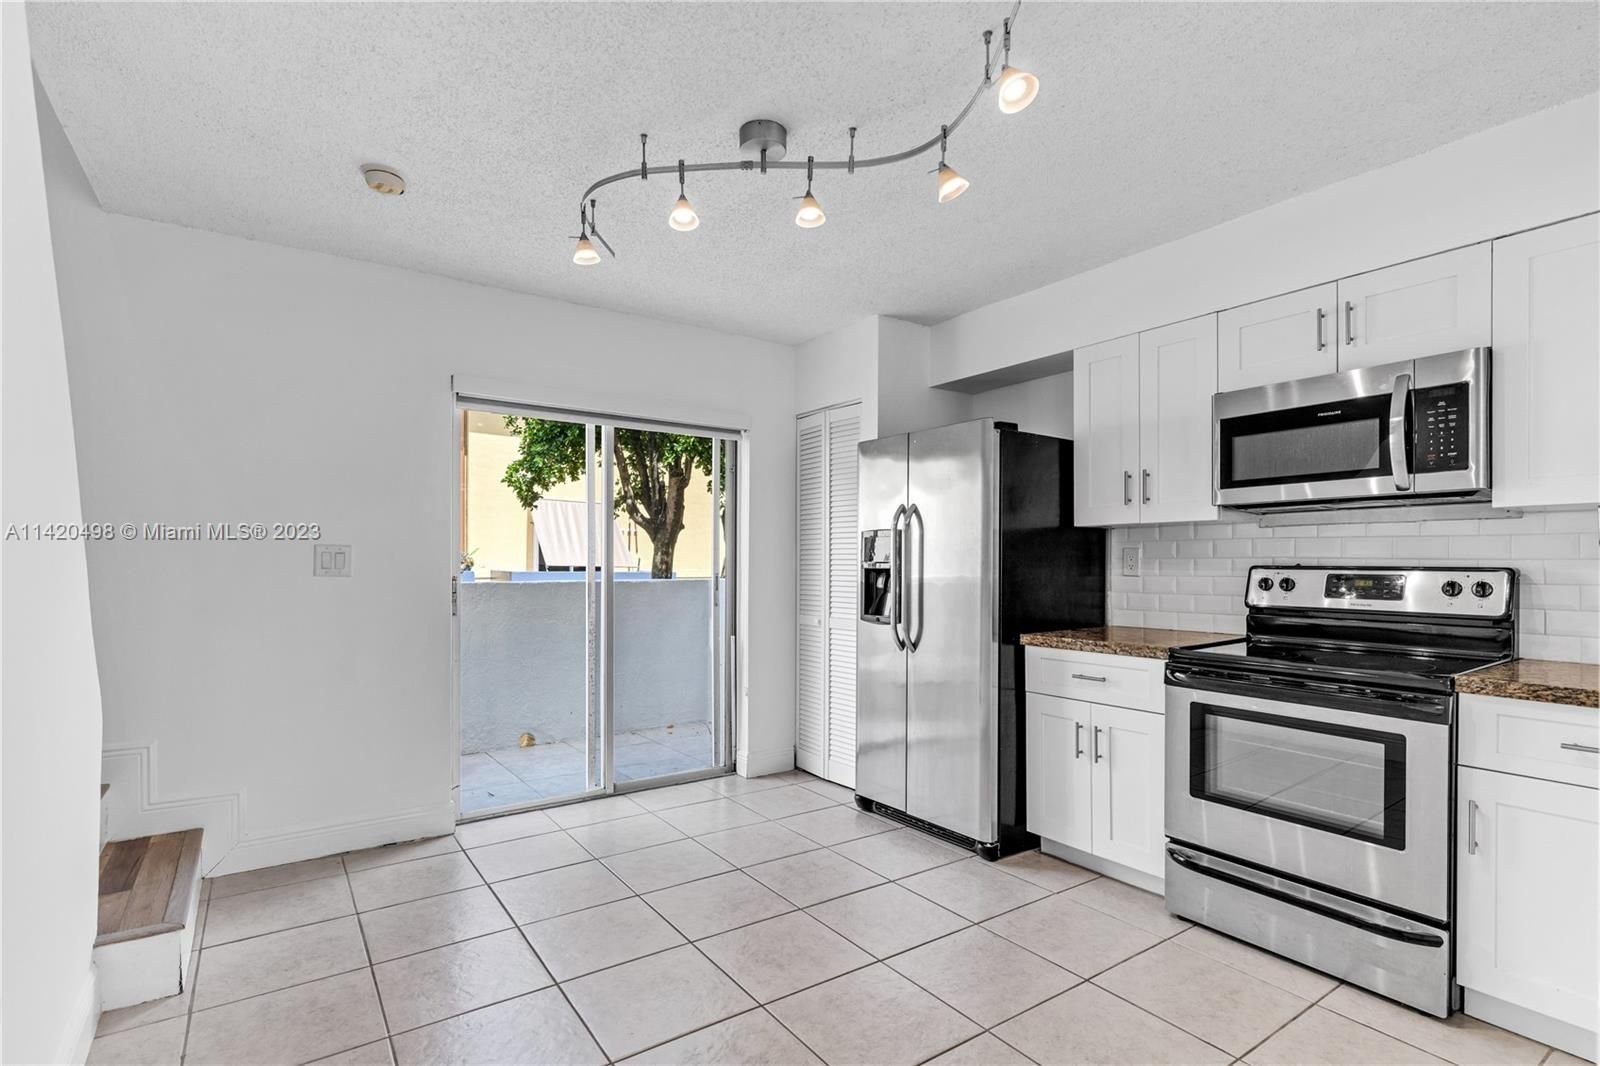 Real estate property located at 8249 149th Ct #6-206, Miami-Dade County, Miami, FL